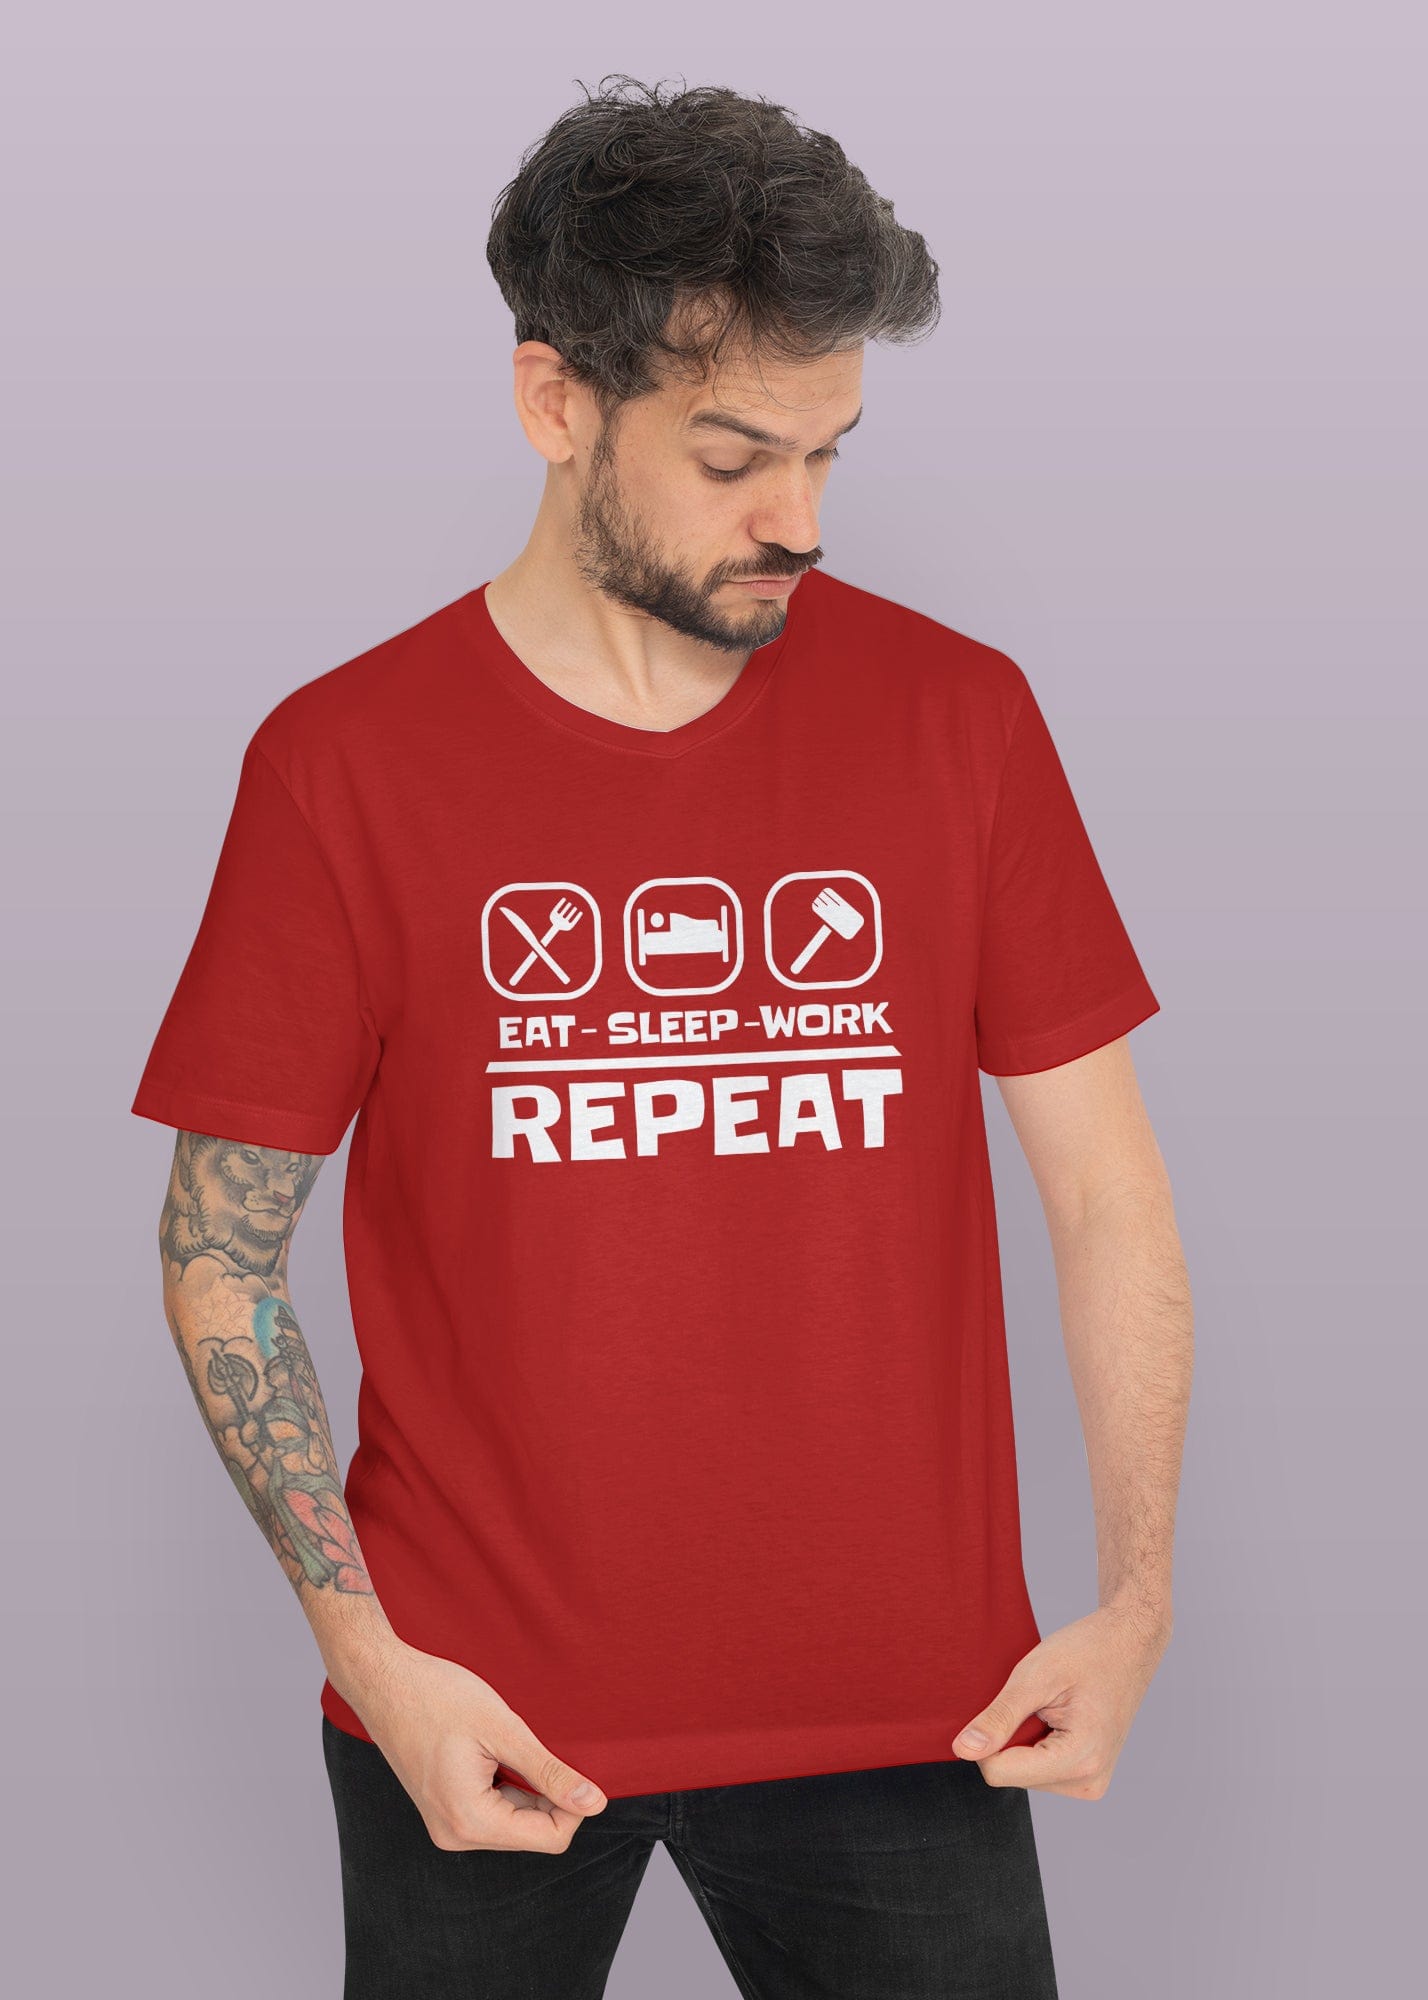 Eat Sleep Work Repeat Printed Half Sleeve Premium Cotton T-shirt For Men